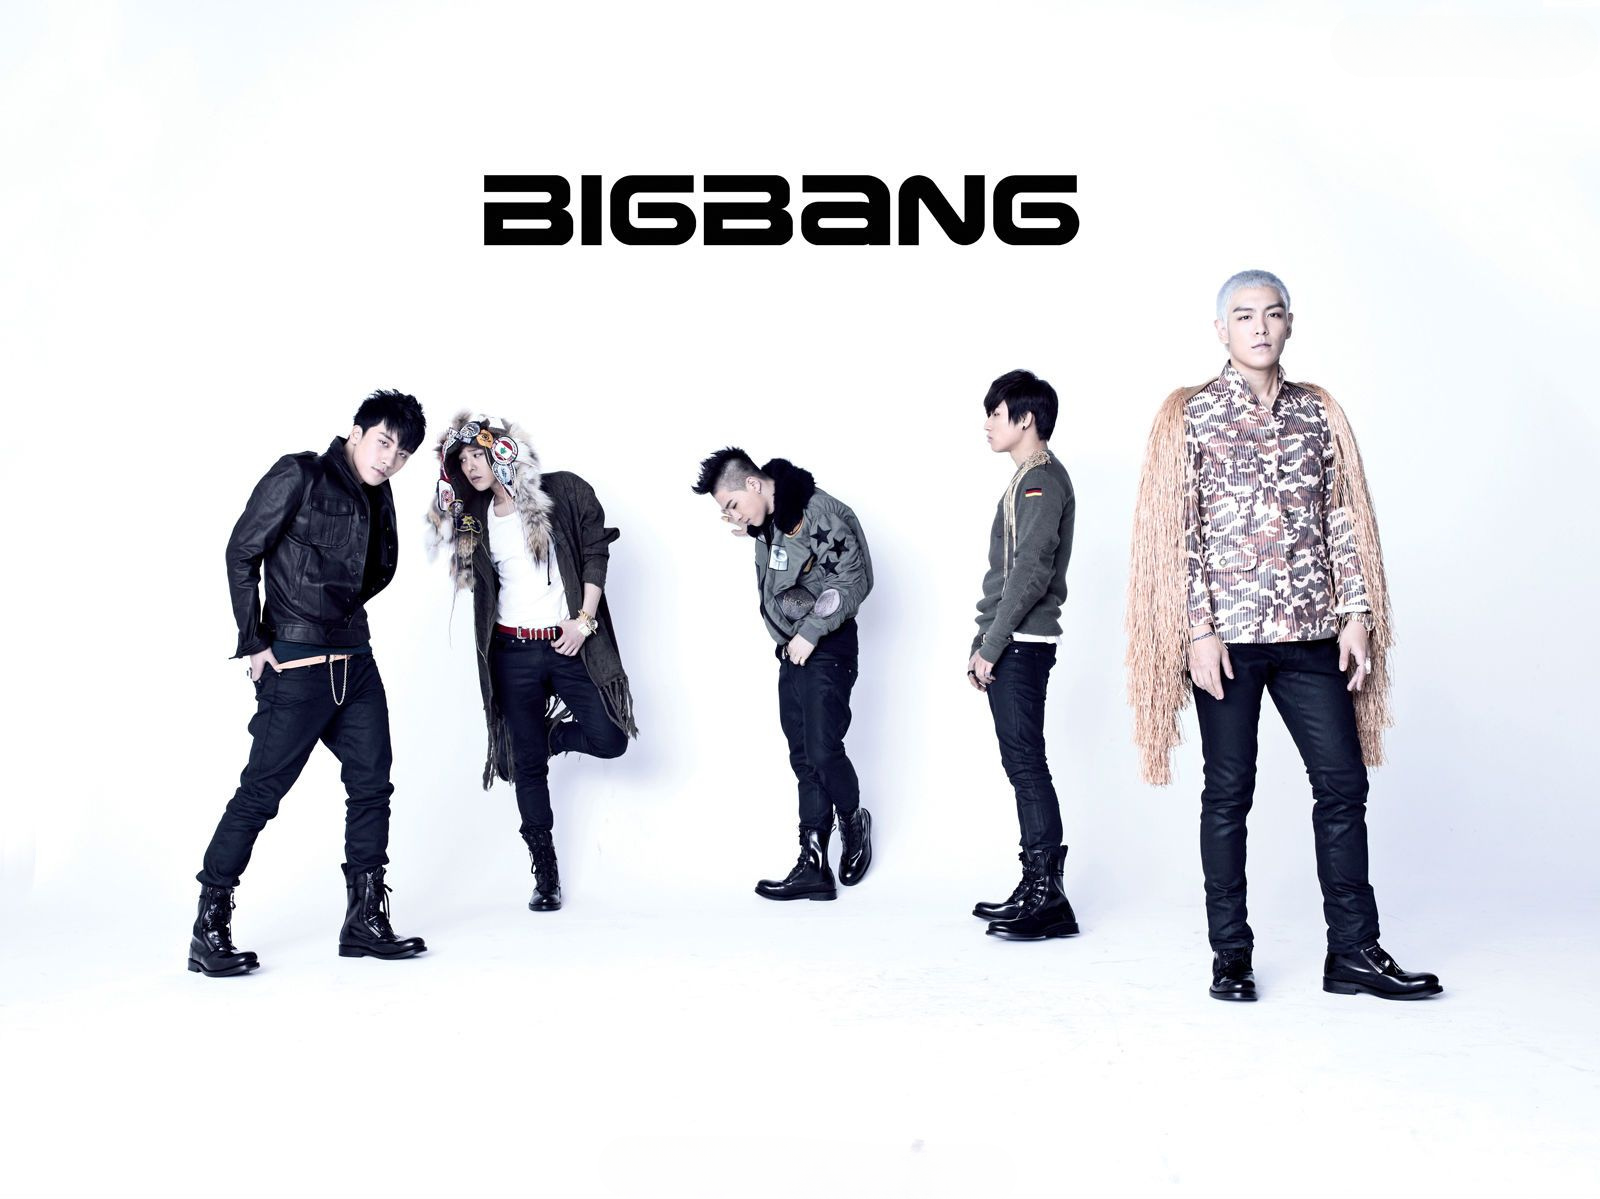 Todoslos 5 Miembros De Bigbang: G-dragon, T.o.p, Taeyang, Daesung Y Seungri.